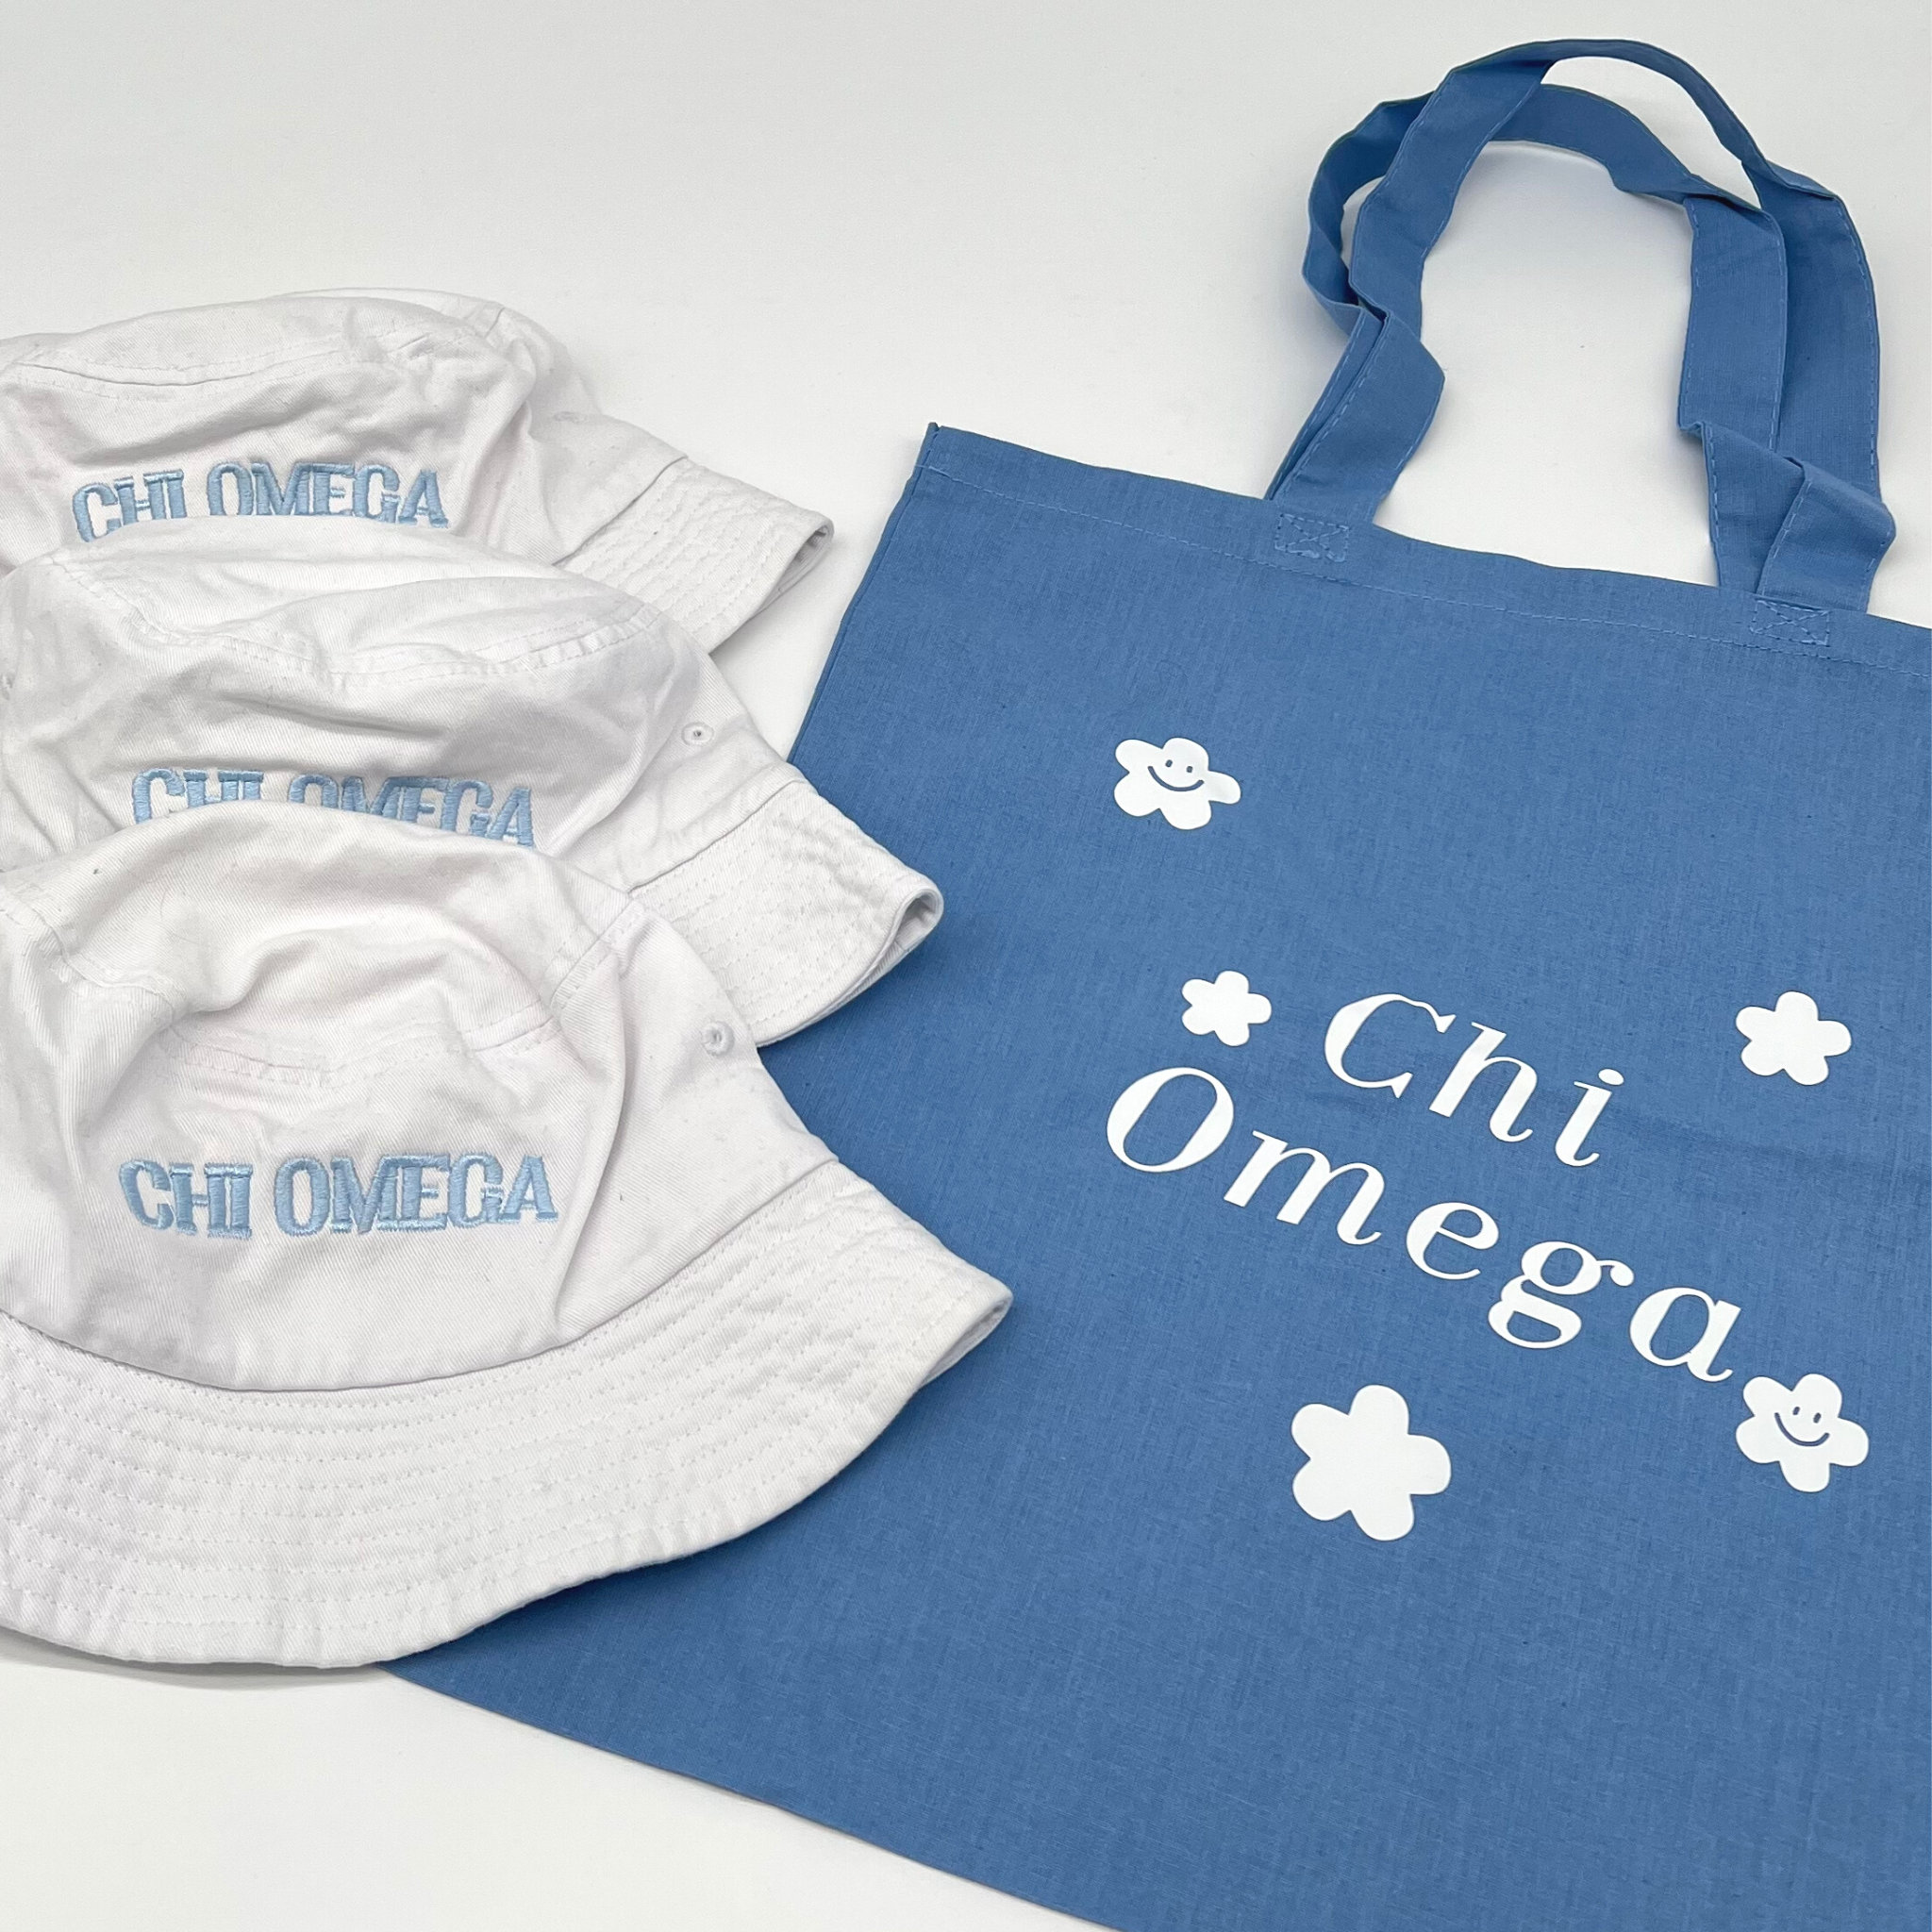 Chi Omega Tote Bag - Sample Sale